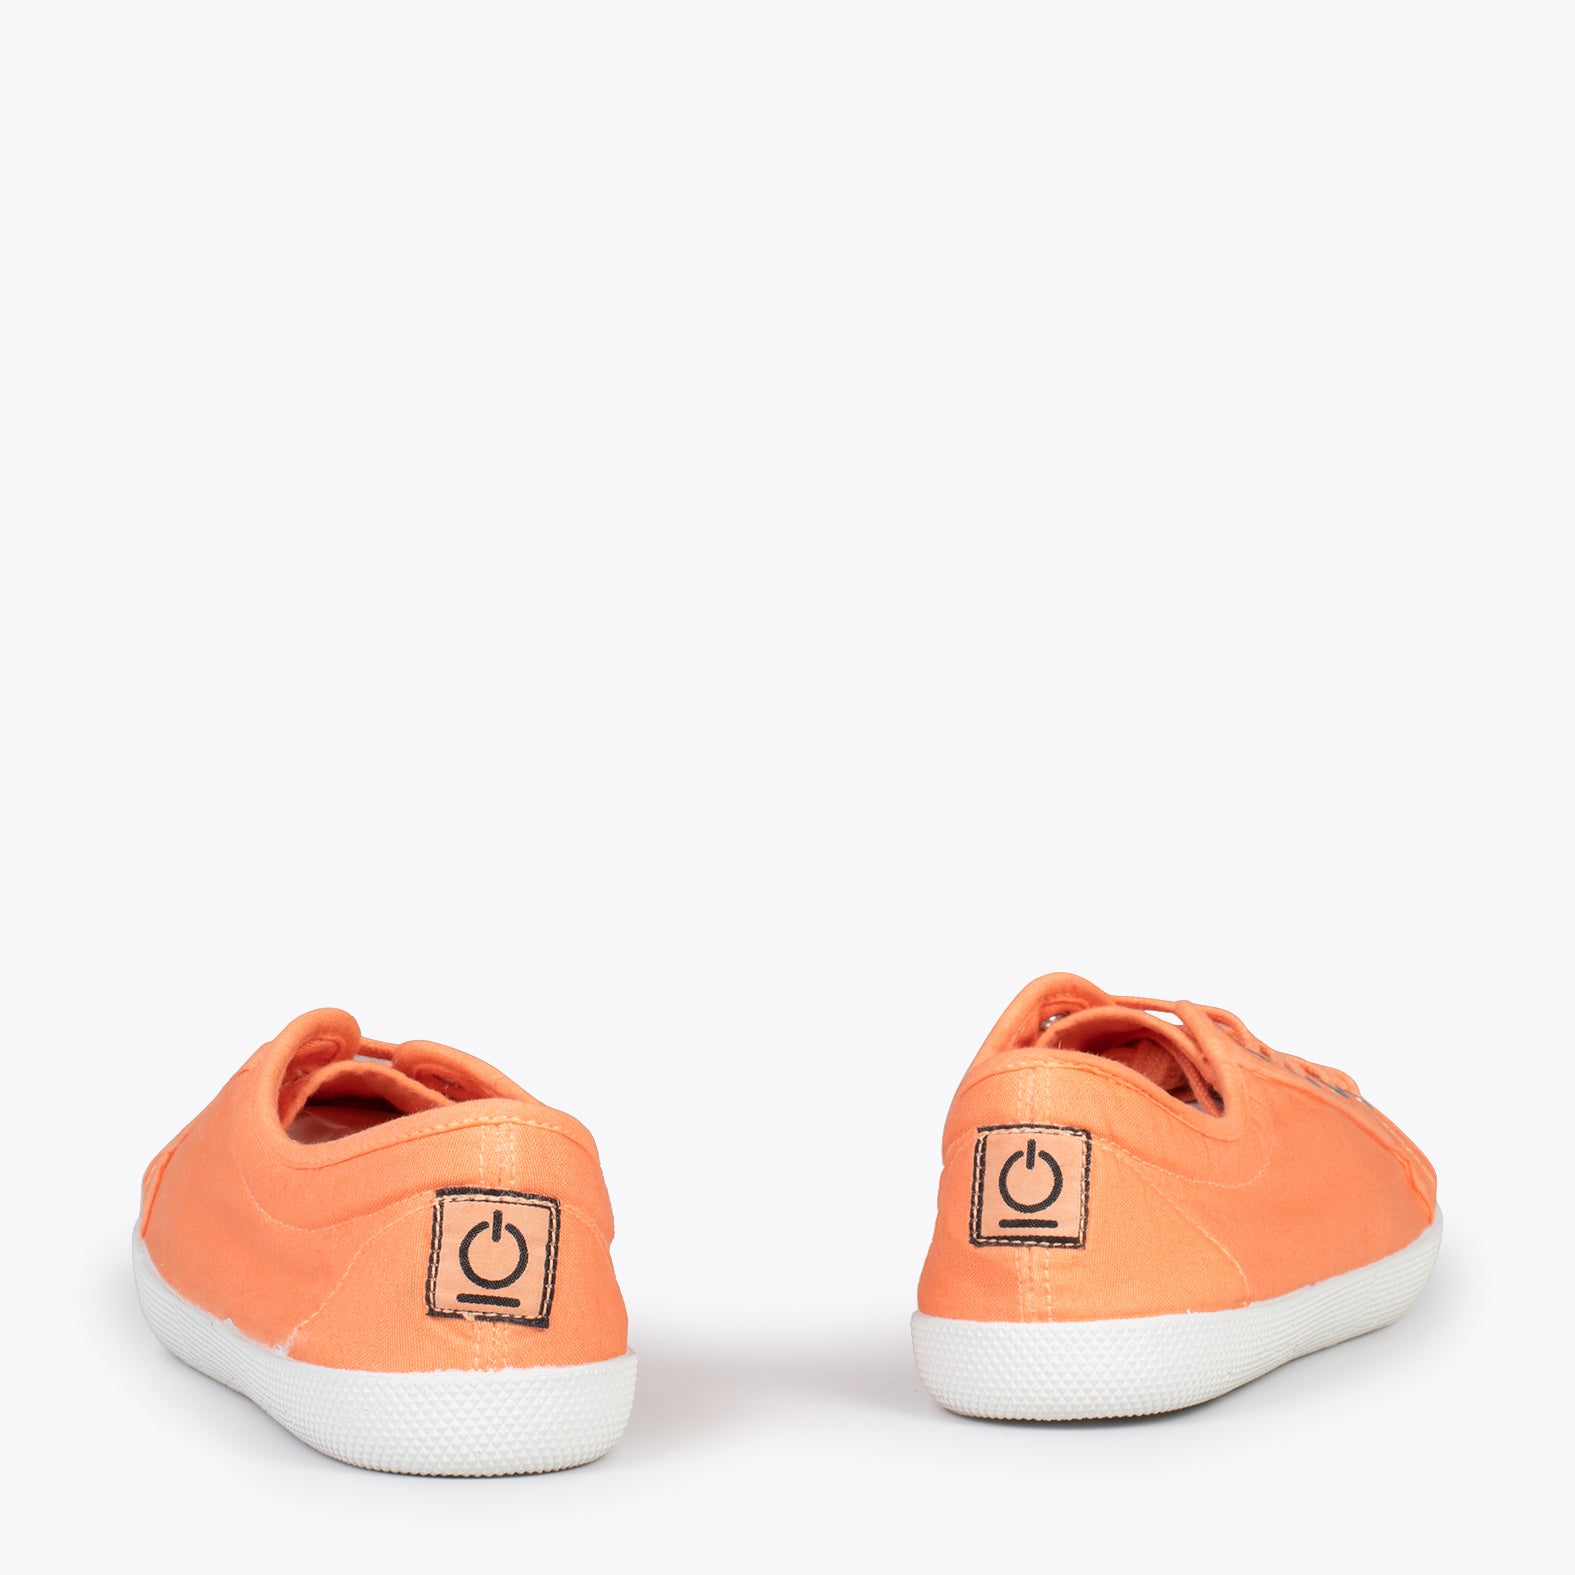 BAOBAB – ORANGE BCI cotton sneakers from IO&GO